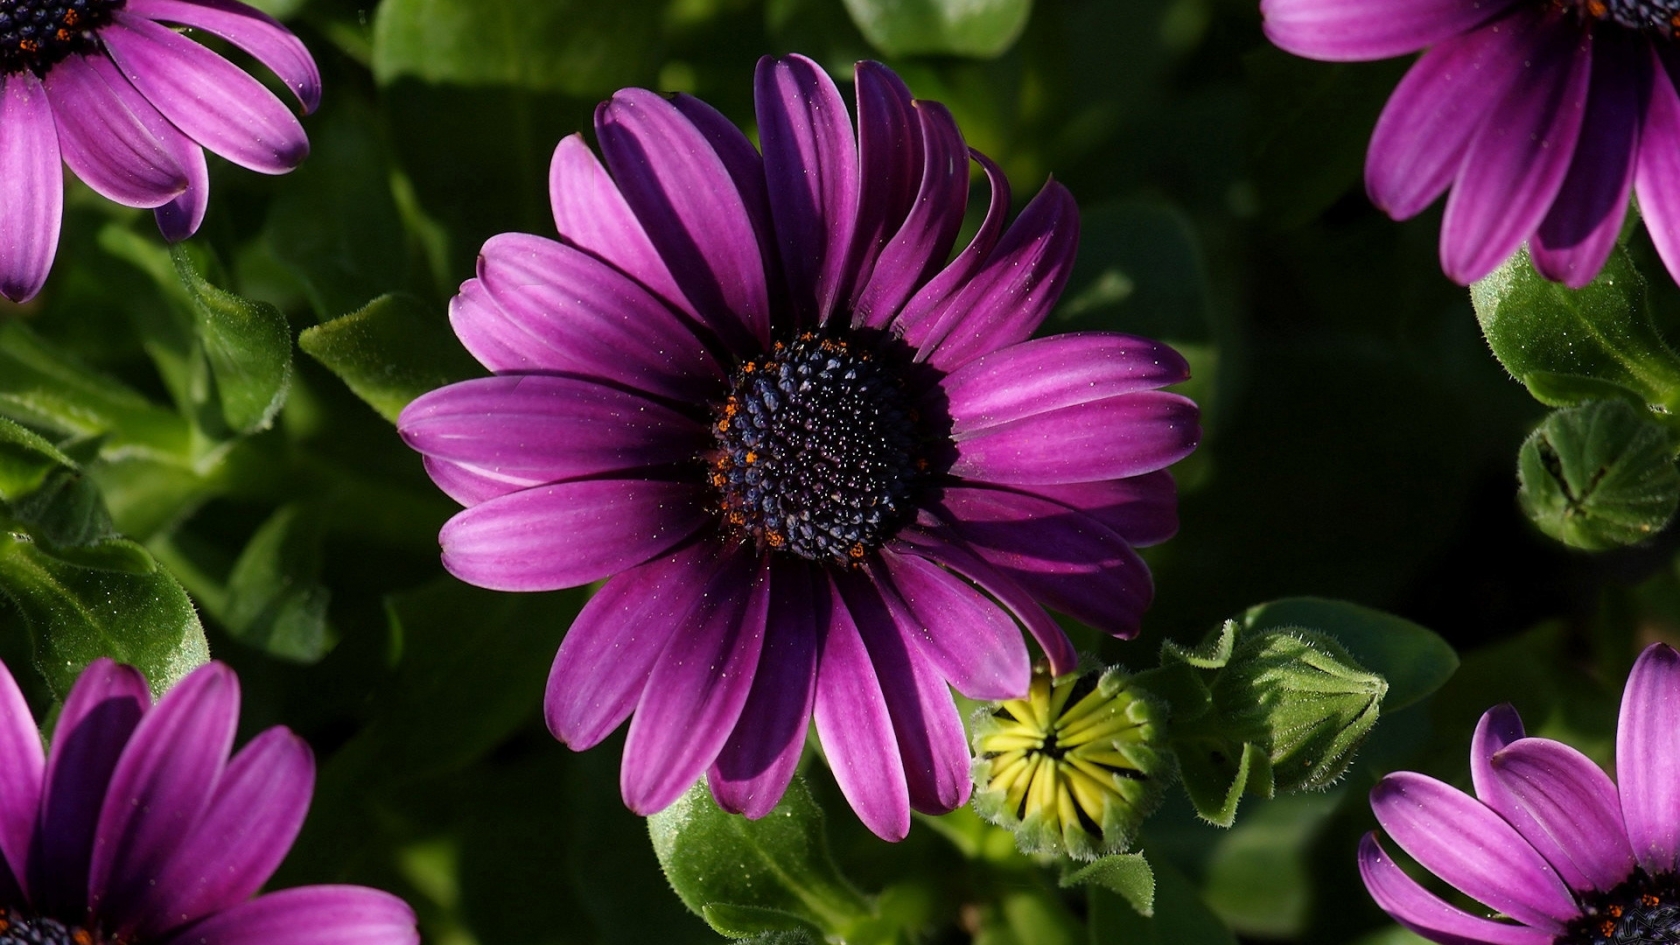 Great Purple Spring Flower for 1680 x 945 HDTV resolution